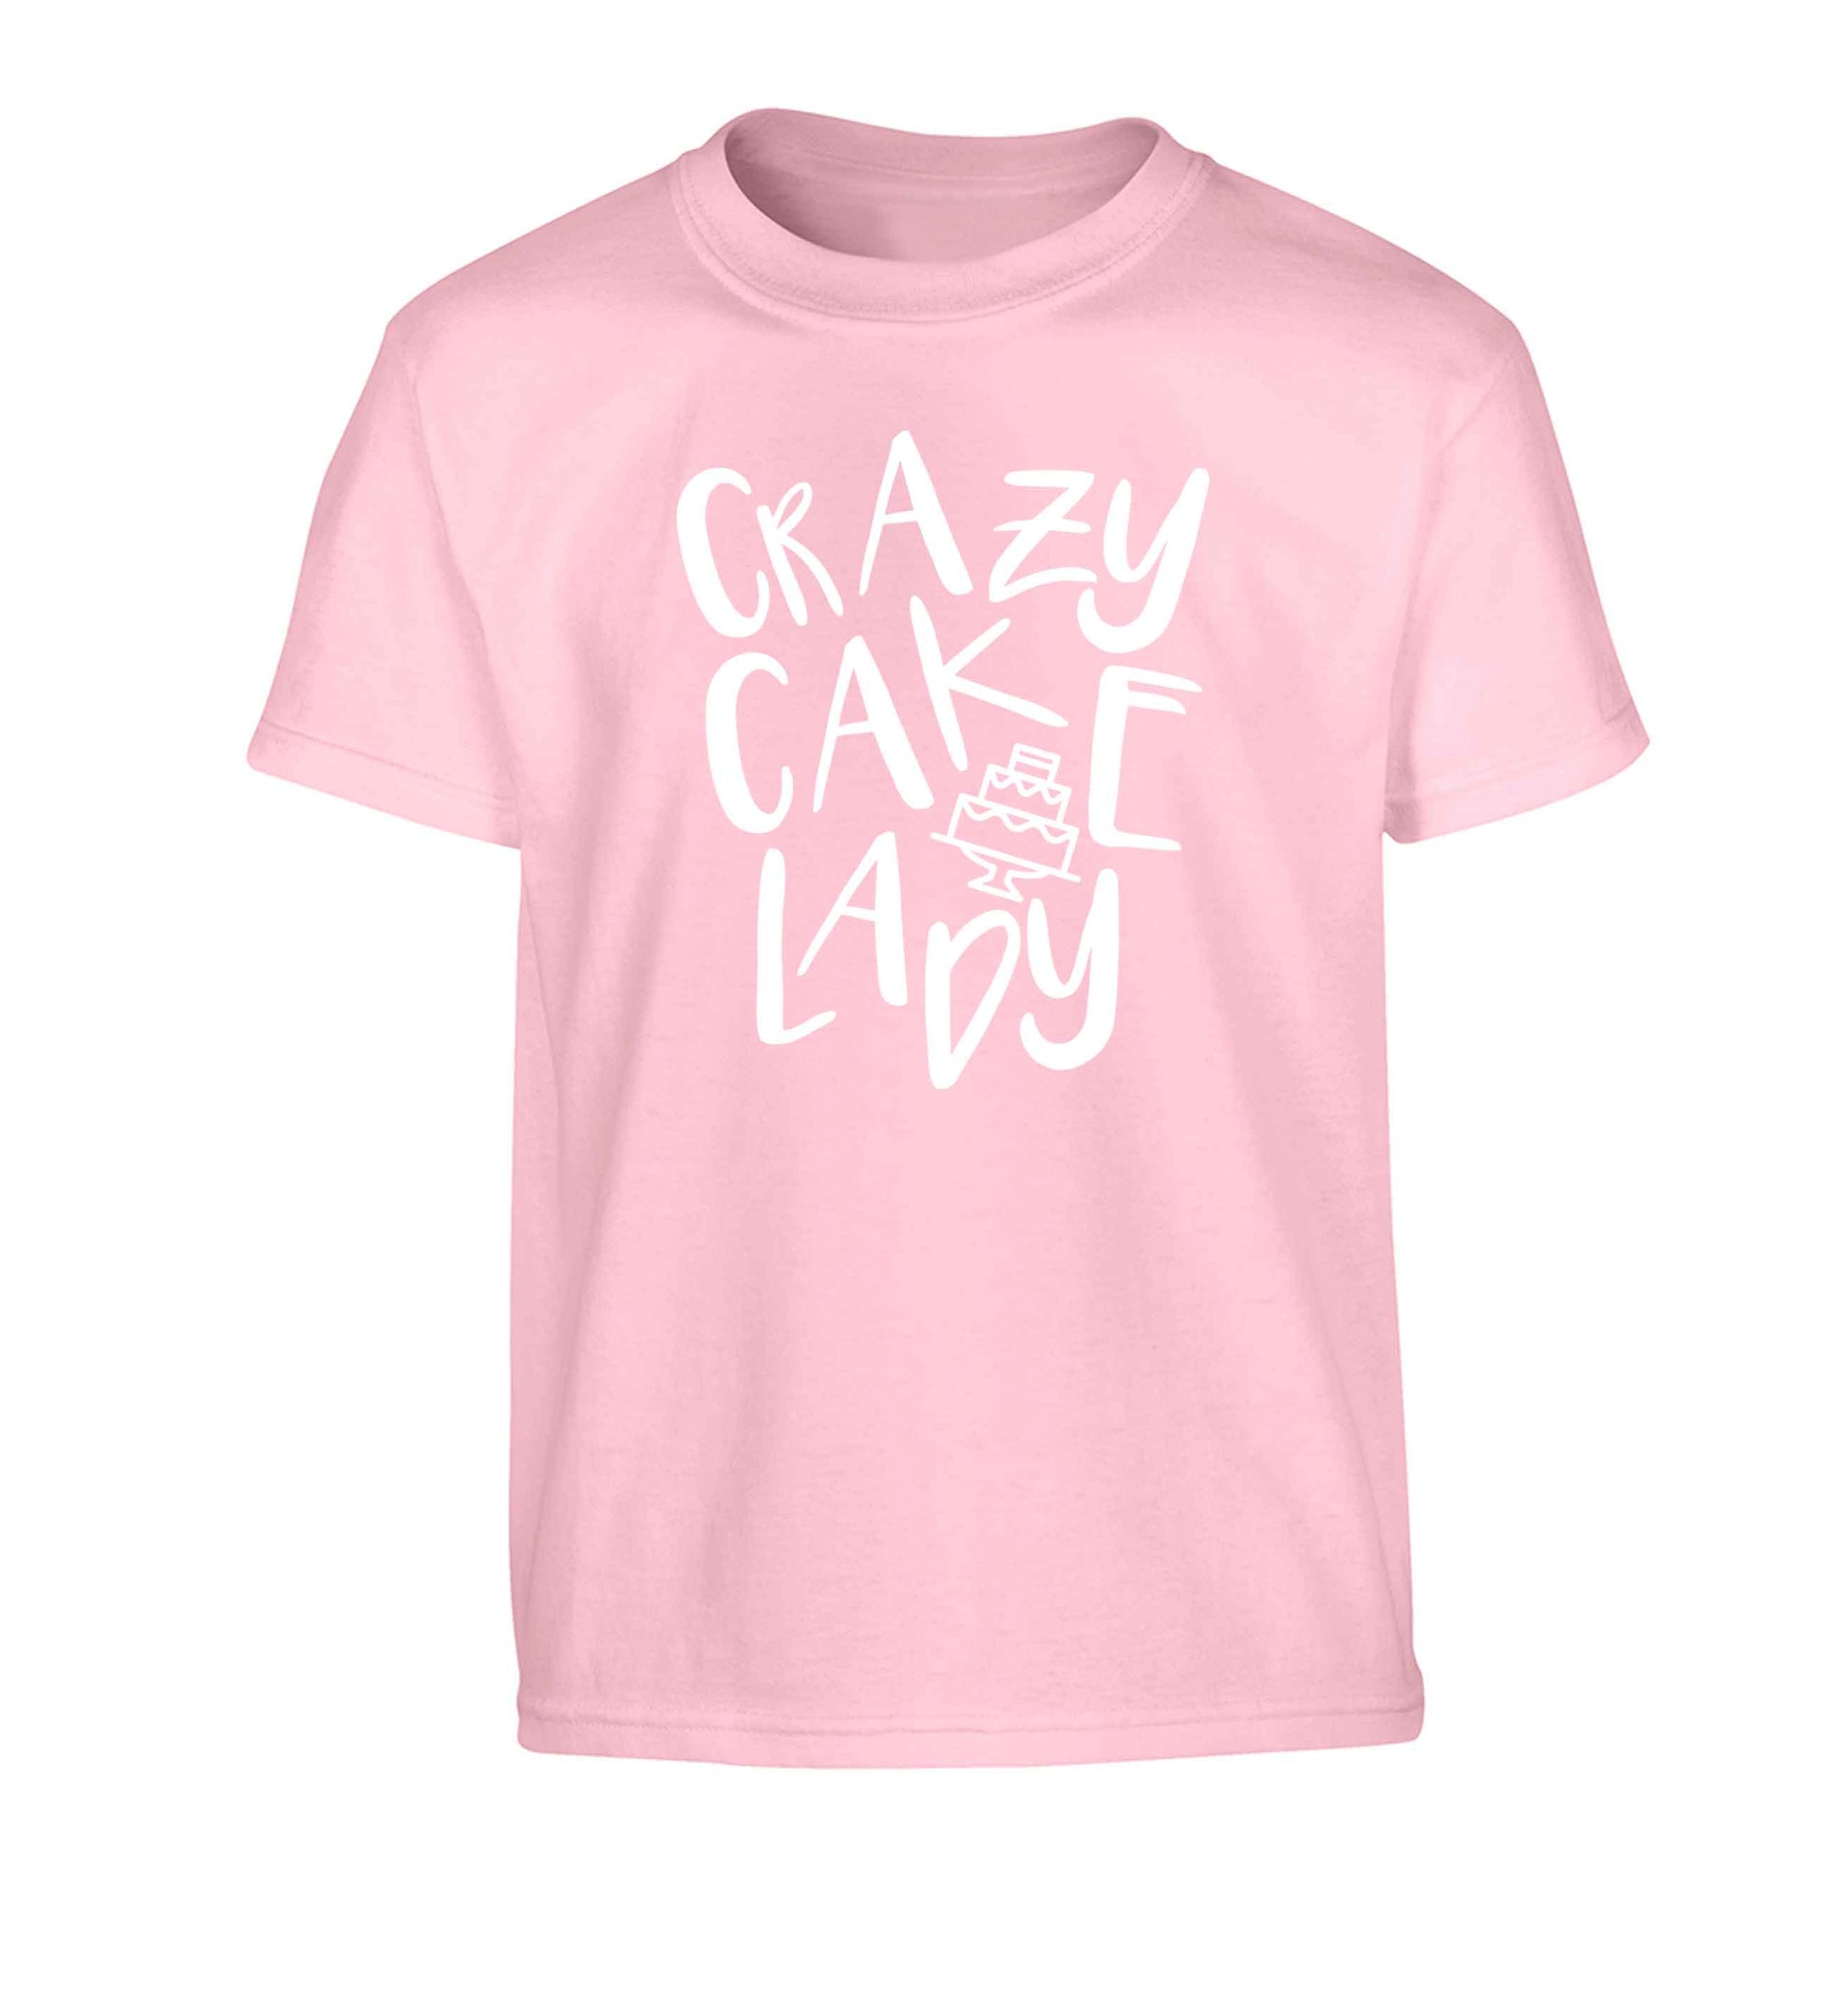 Crazy cake lady Children's light pink Tshirt 12-13 Years